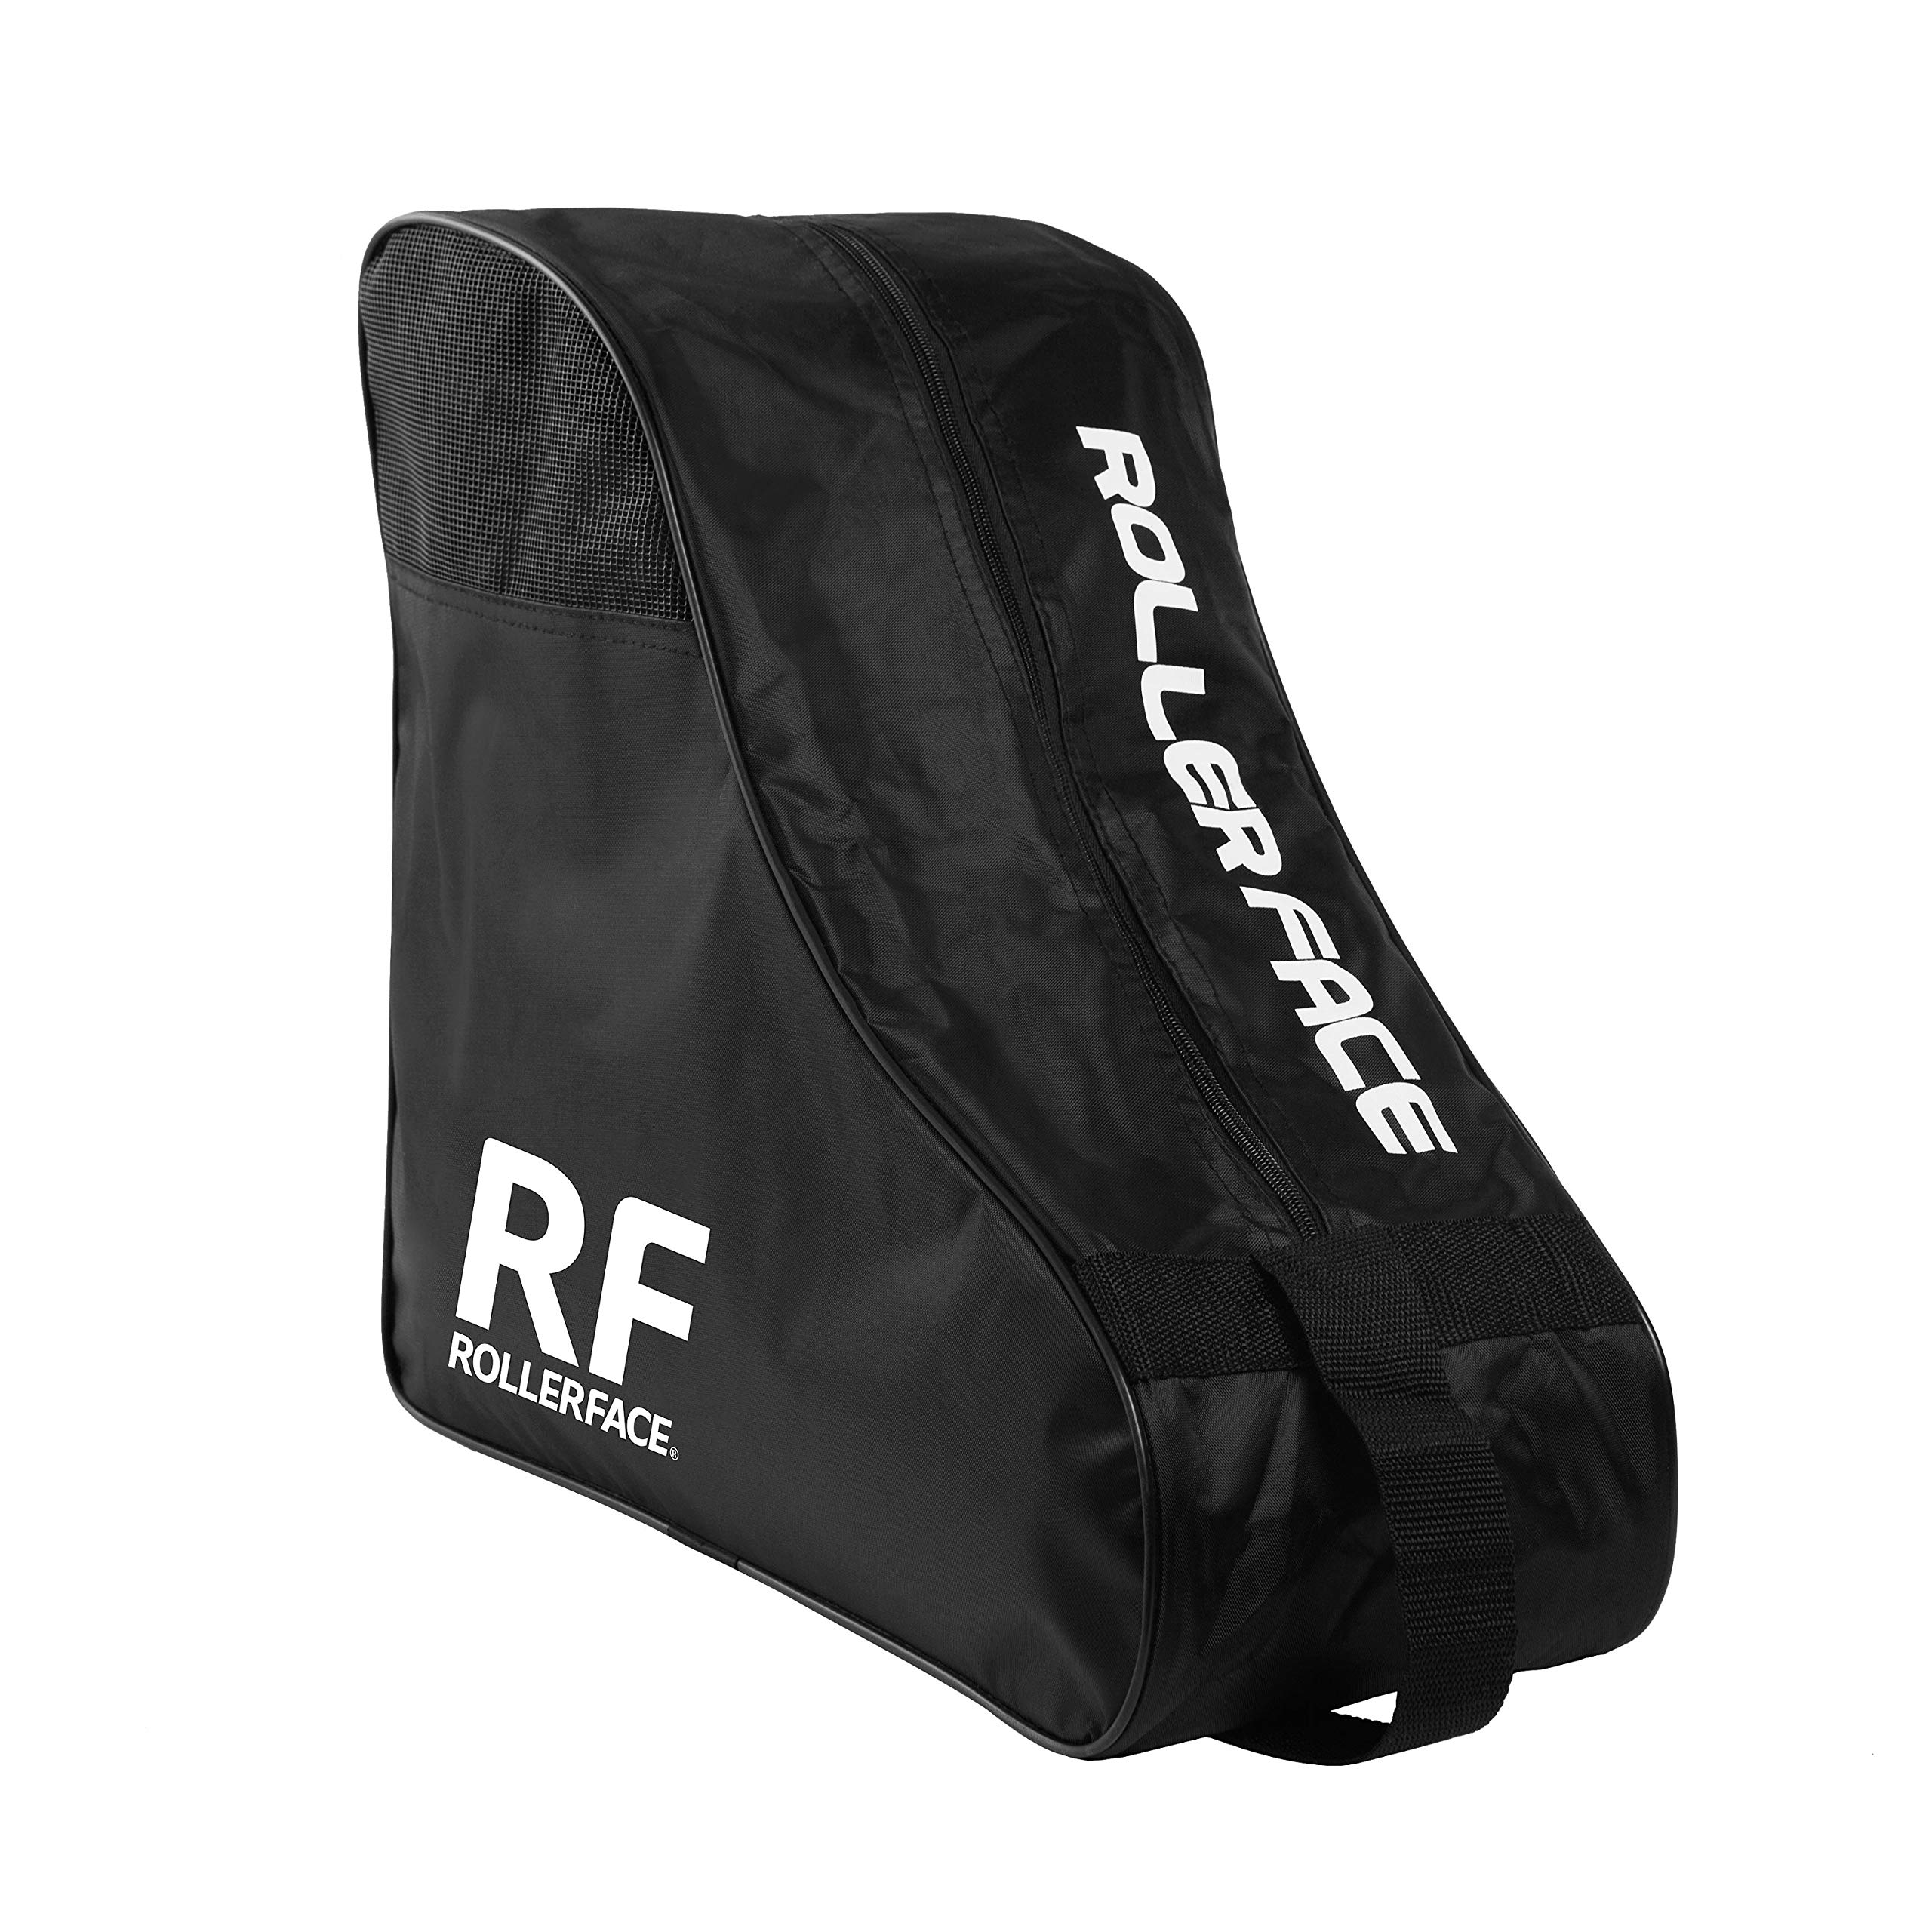 Rollerface RFSport Black Men’s Adult Fitness, Sport and Recreation, Premium Inline Skate